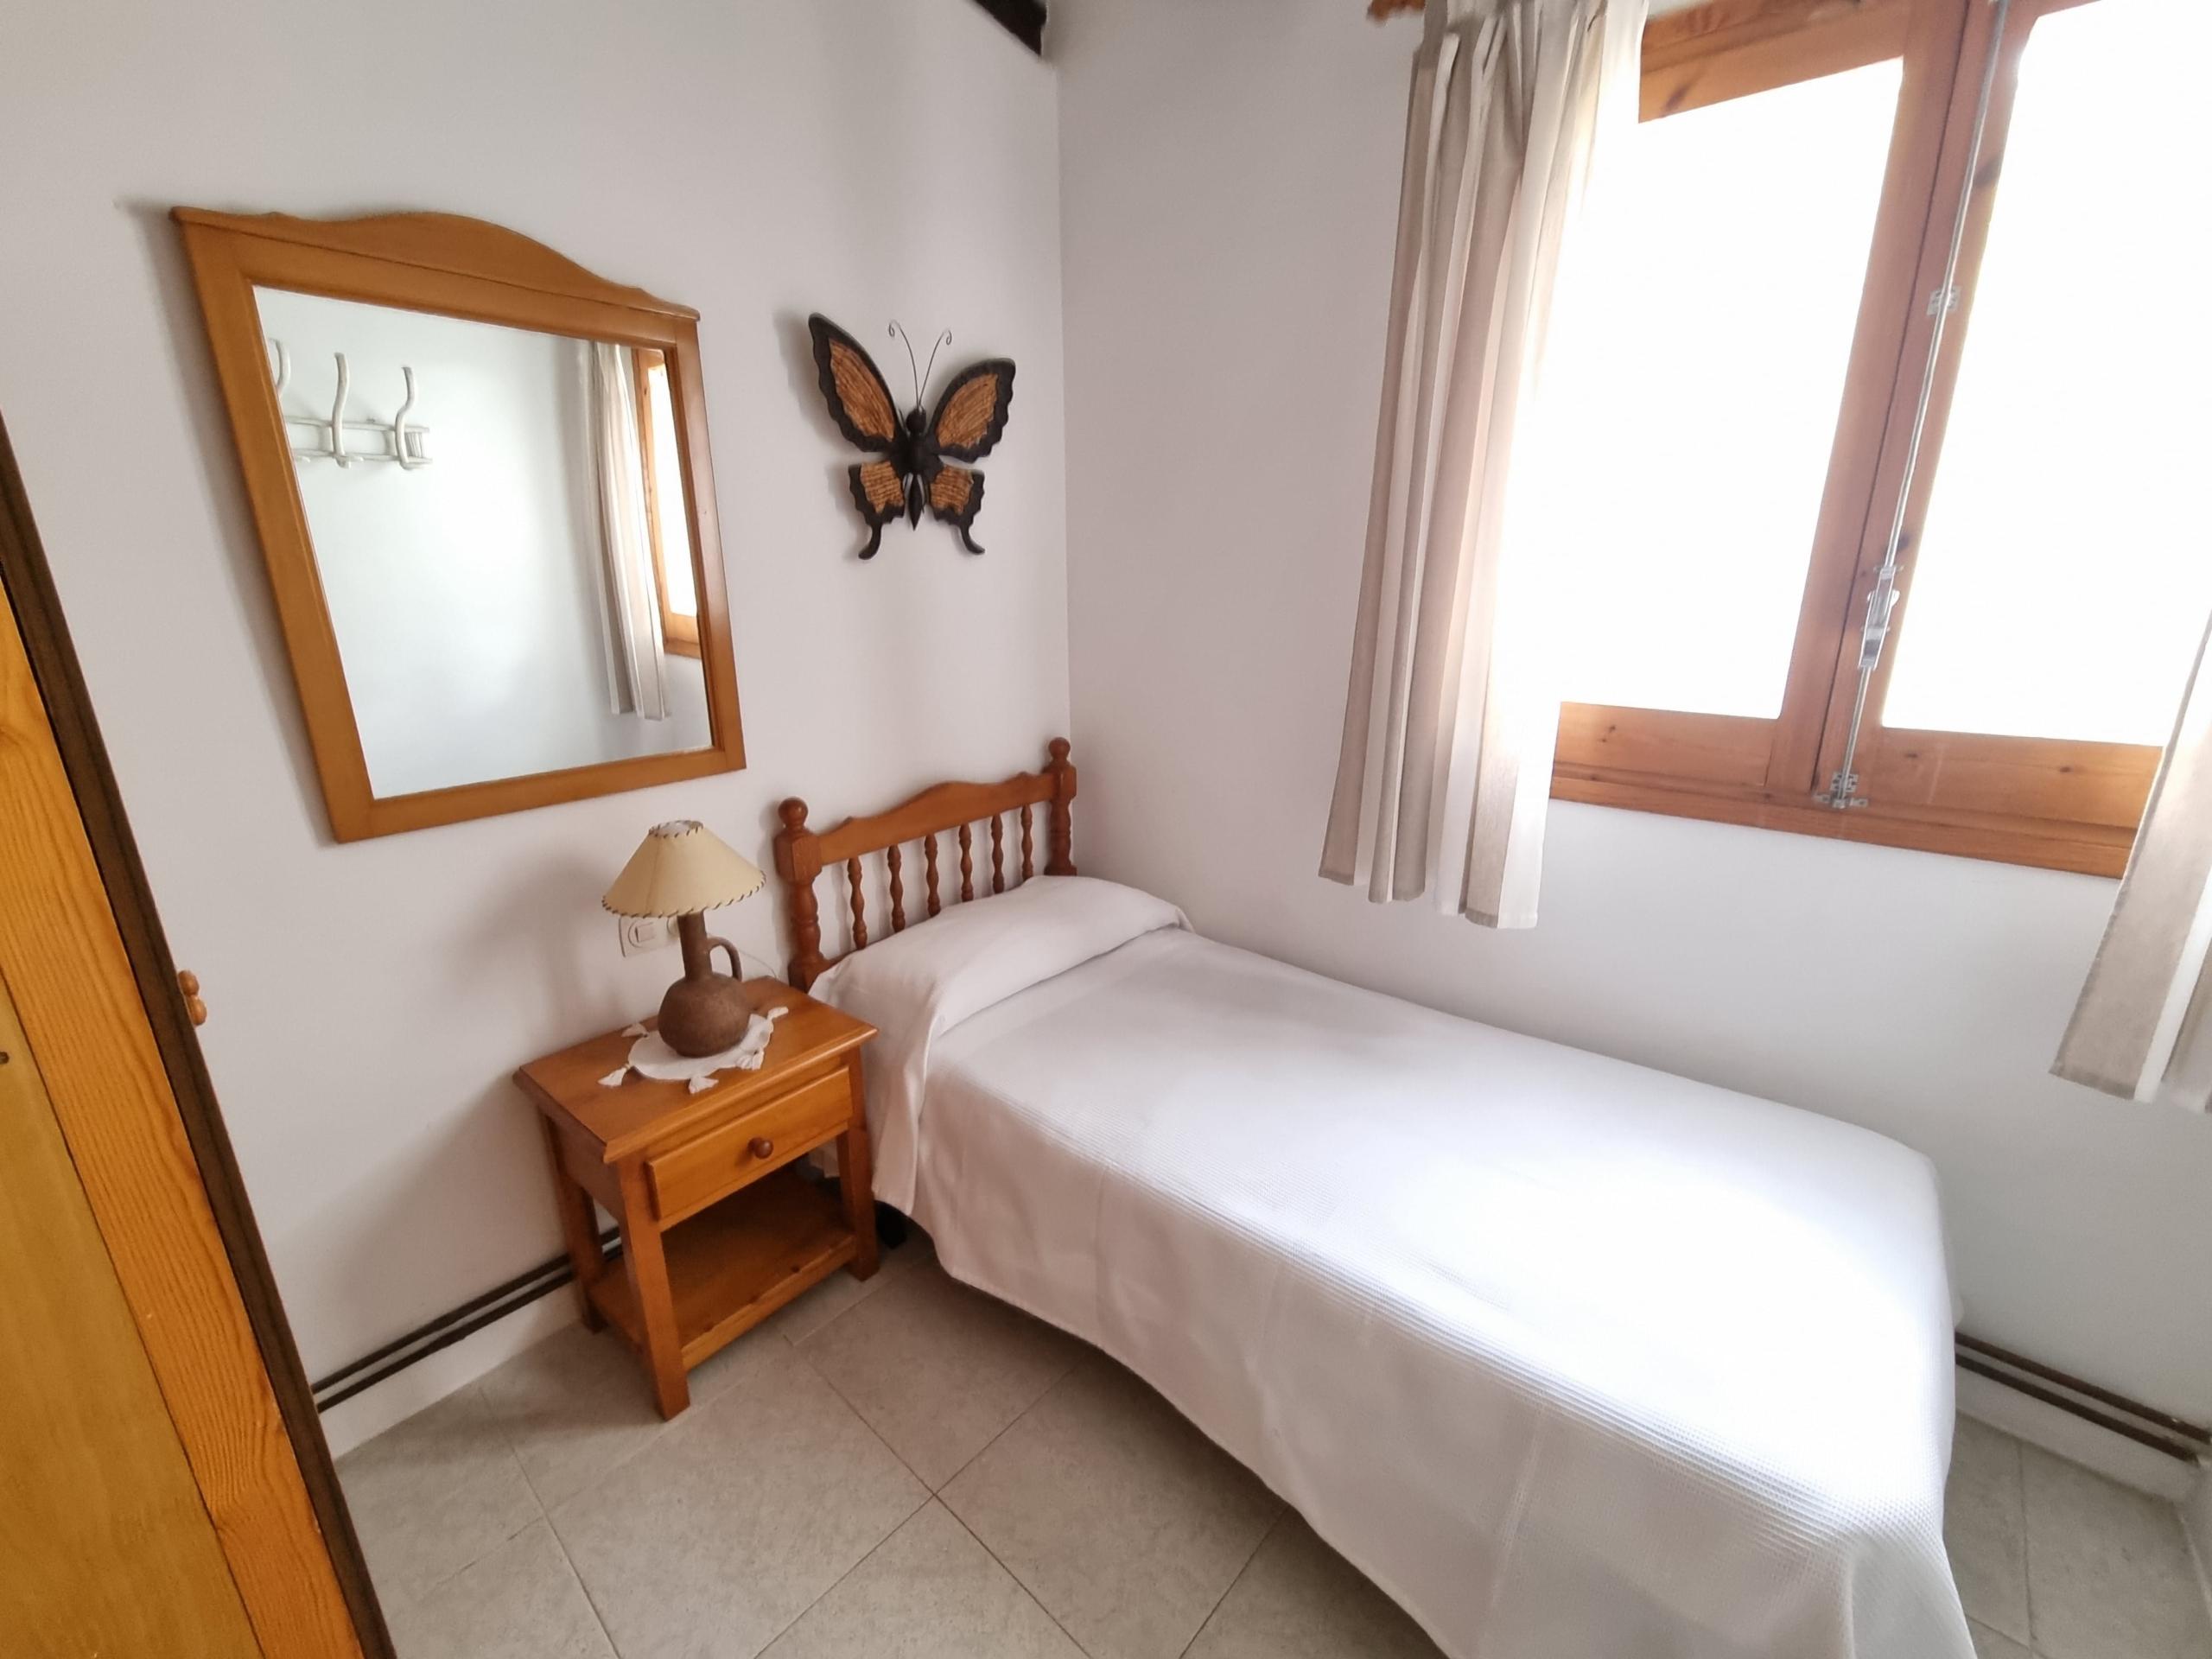 Rustic 5-bedrooms finca with HUTTE in l'Ametlla de Mar